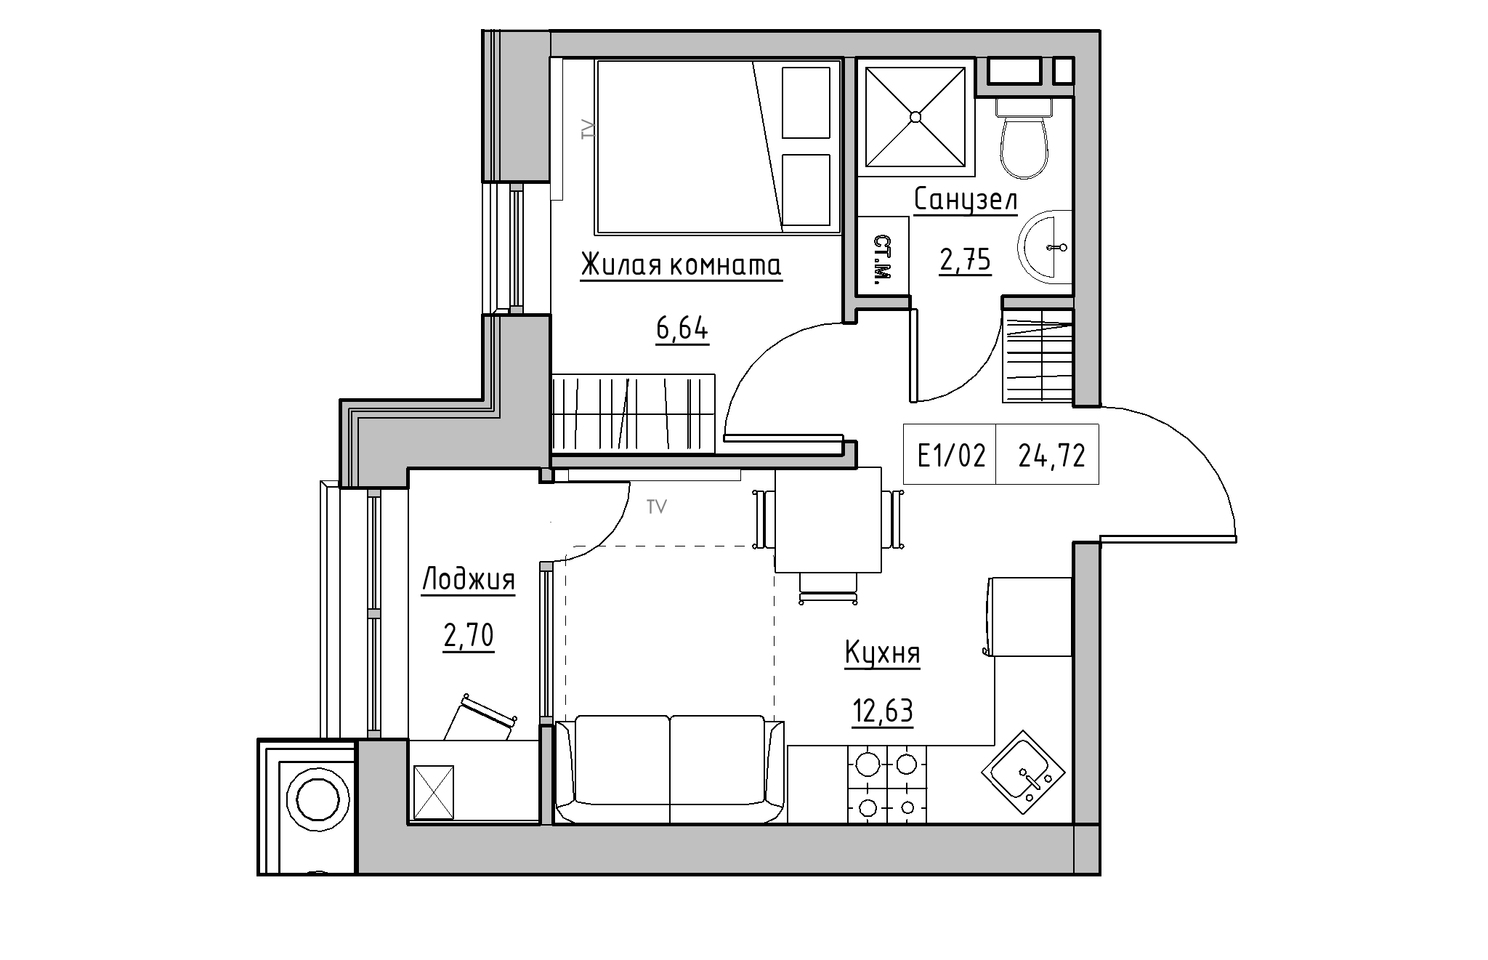 Planning 1-rm flats area 24.72m2, KS-010-03/0013.